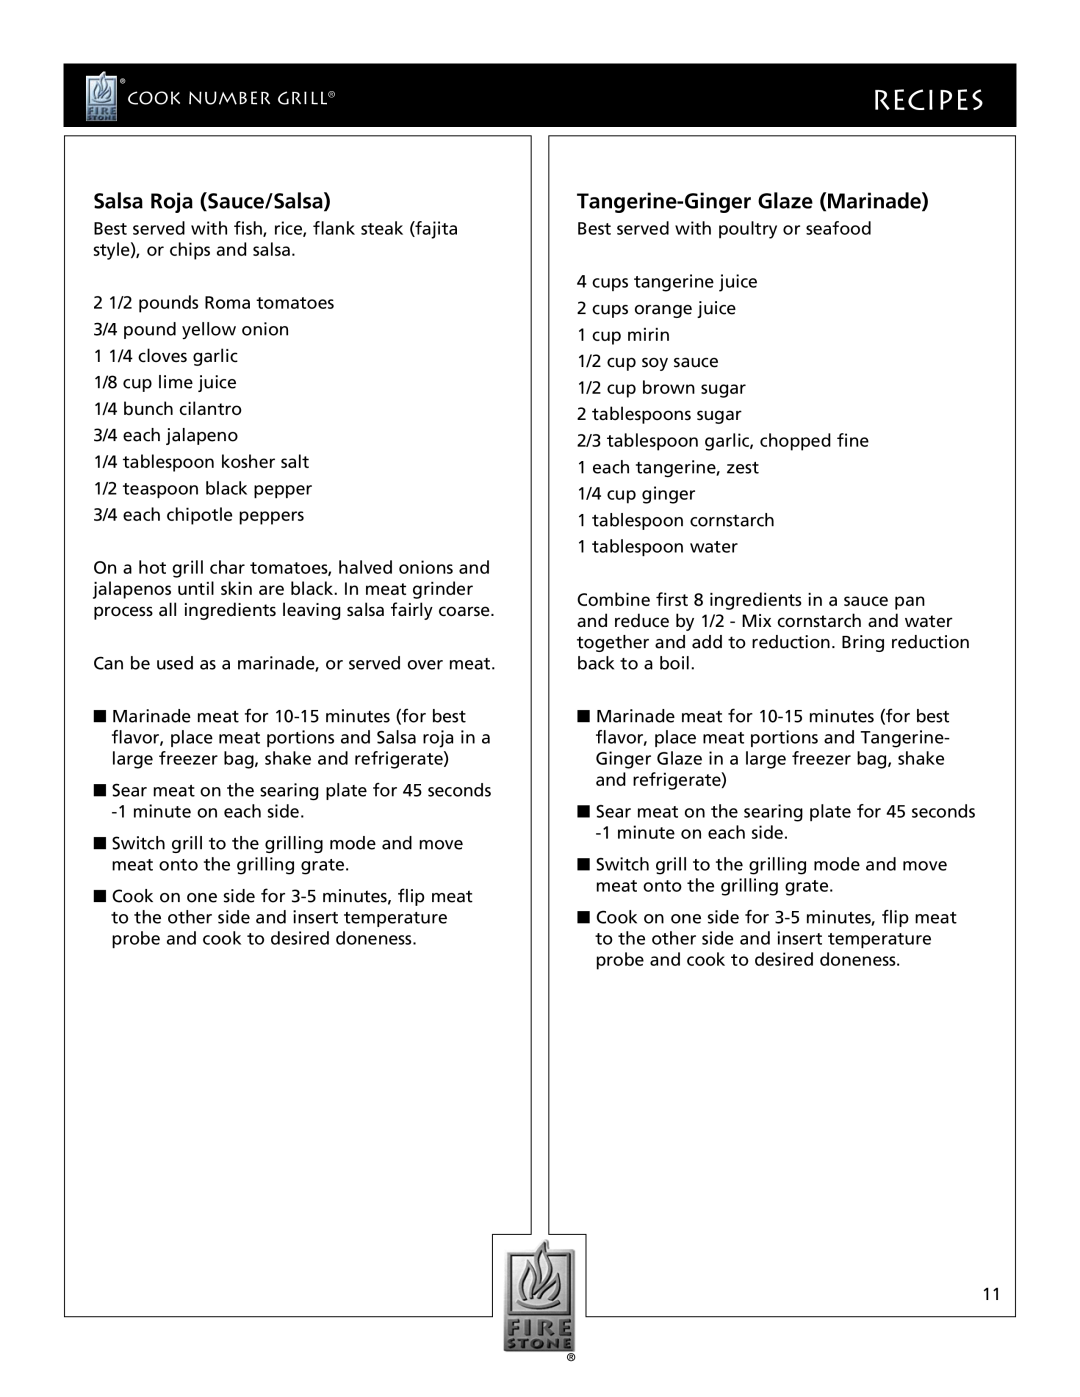 Dual LG20ie, JAG20e, CNE20 manual Salsa Roja Sauce/Salsa, Tangerine-Ginger Glaze Marinade, Recipes, Cook Number Grill 